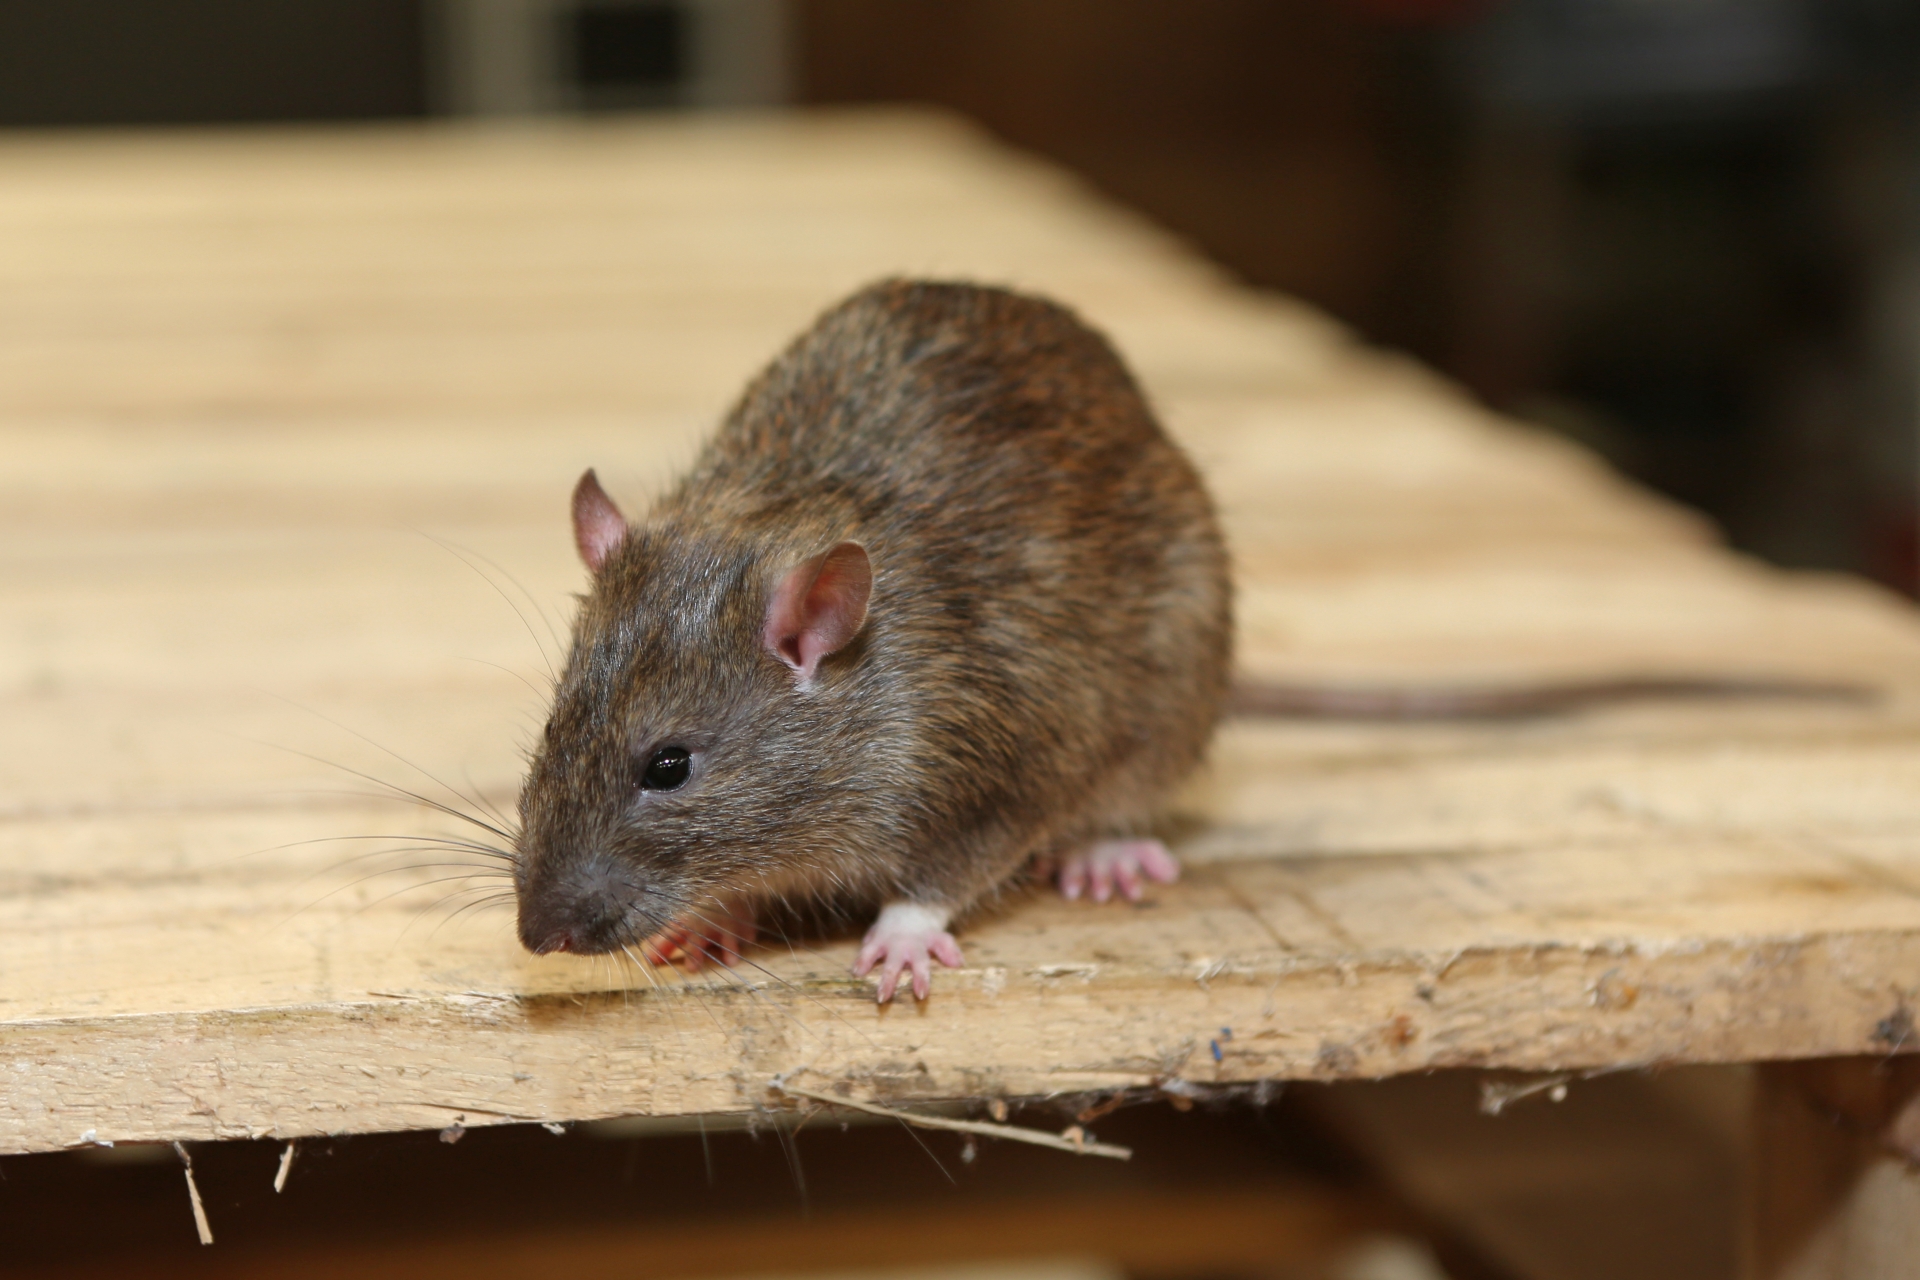 Rat extermination, Pest Control in Grove Park, SE12. Call Now 020 8166 9746